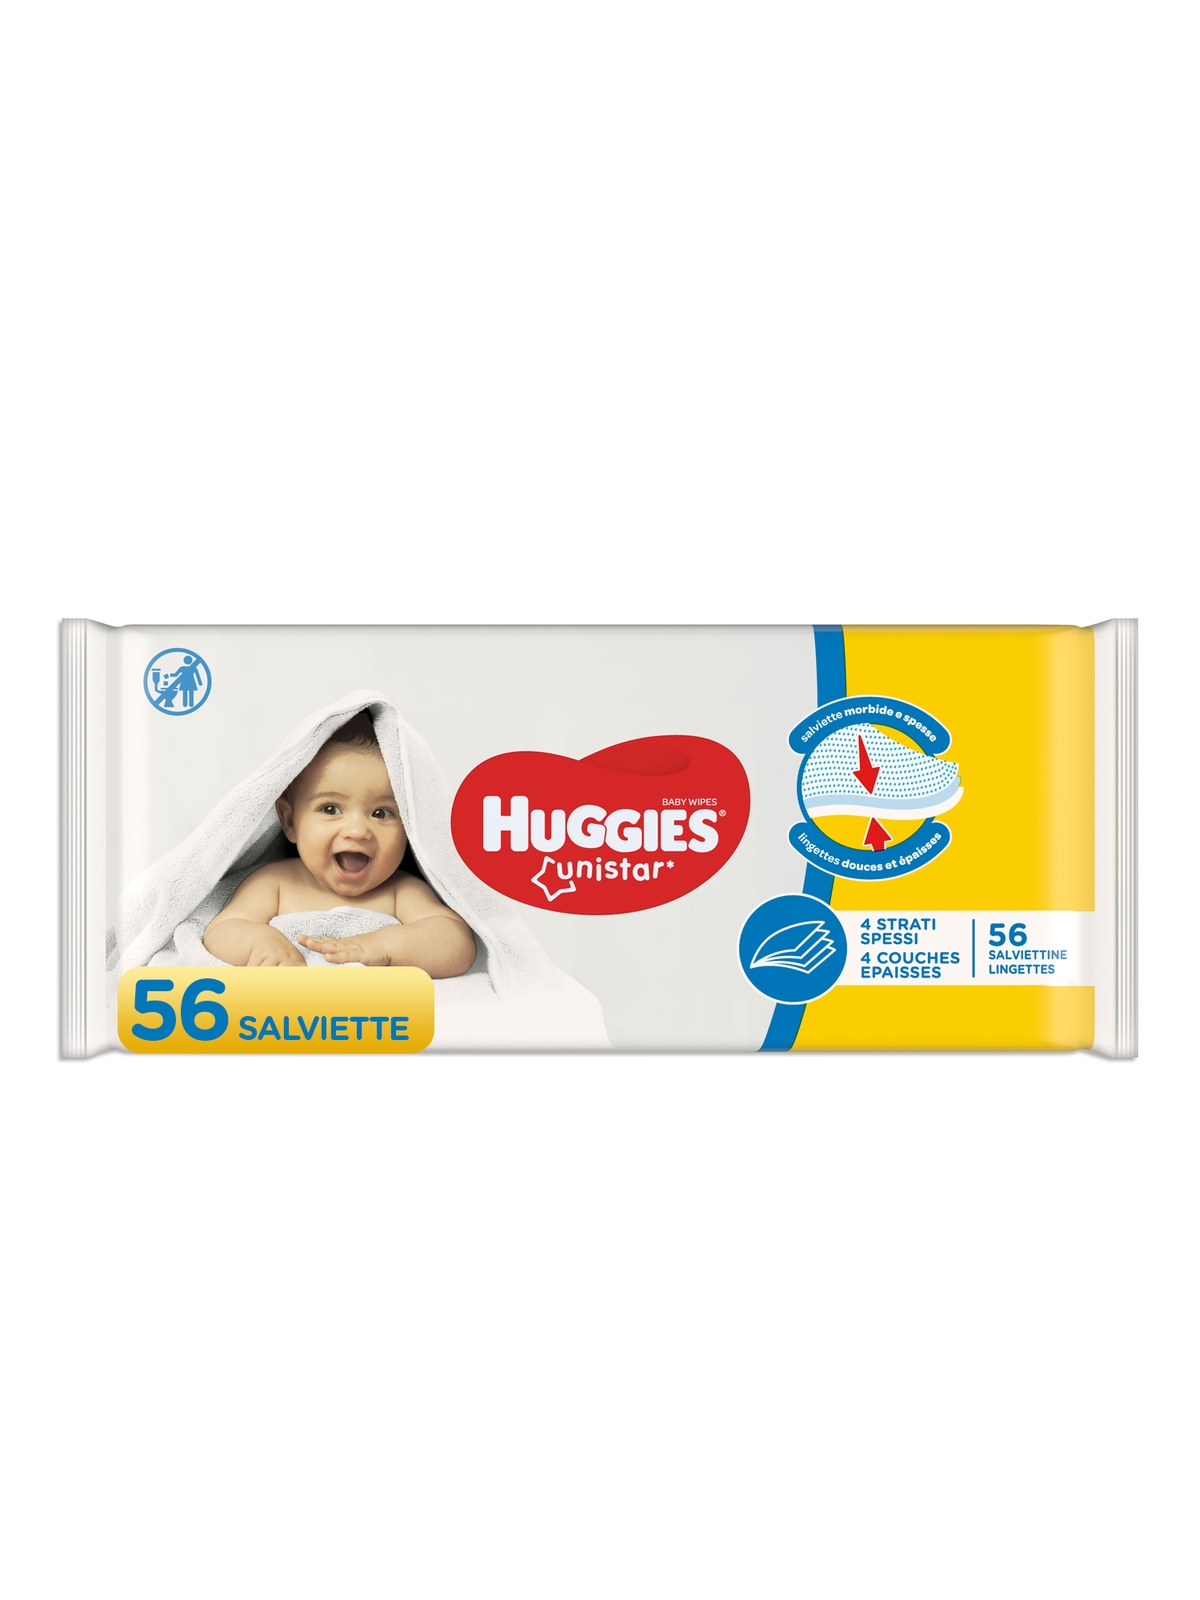 Huggies unistar salviette umidificate per bambini 56 pezzi - Huggies